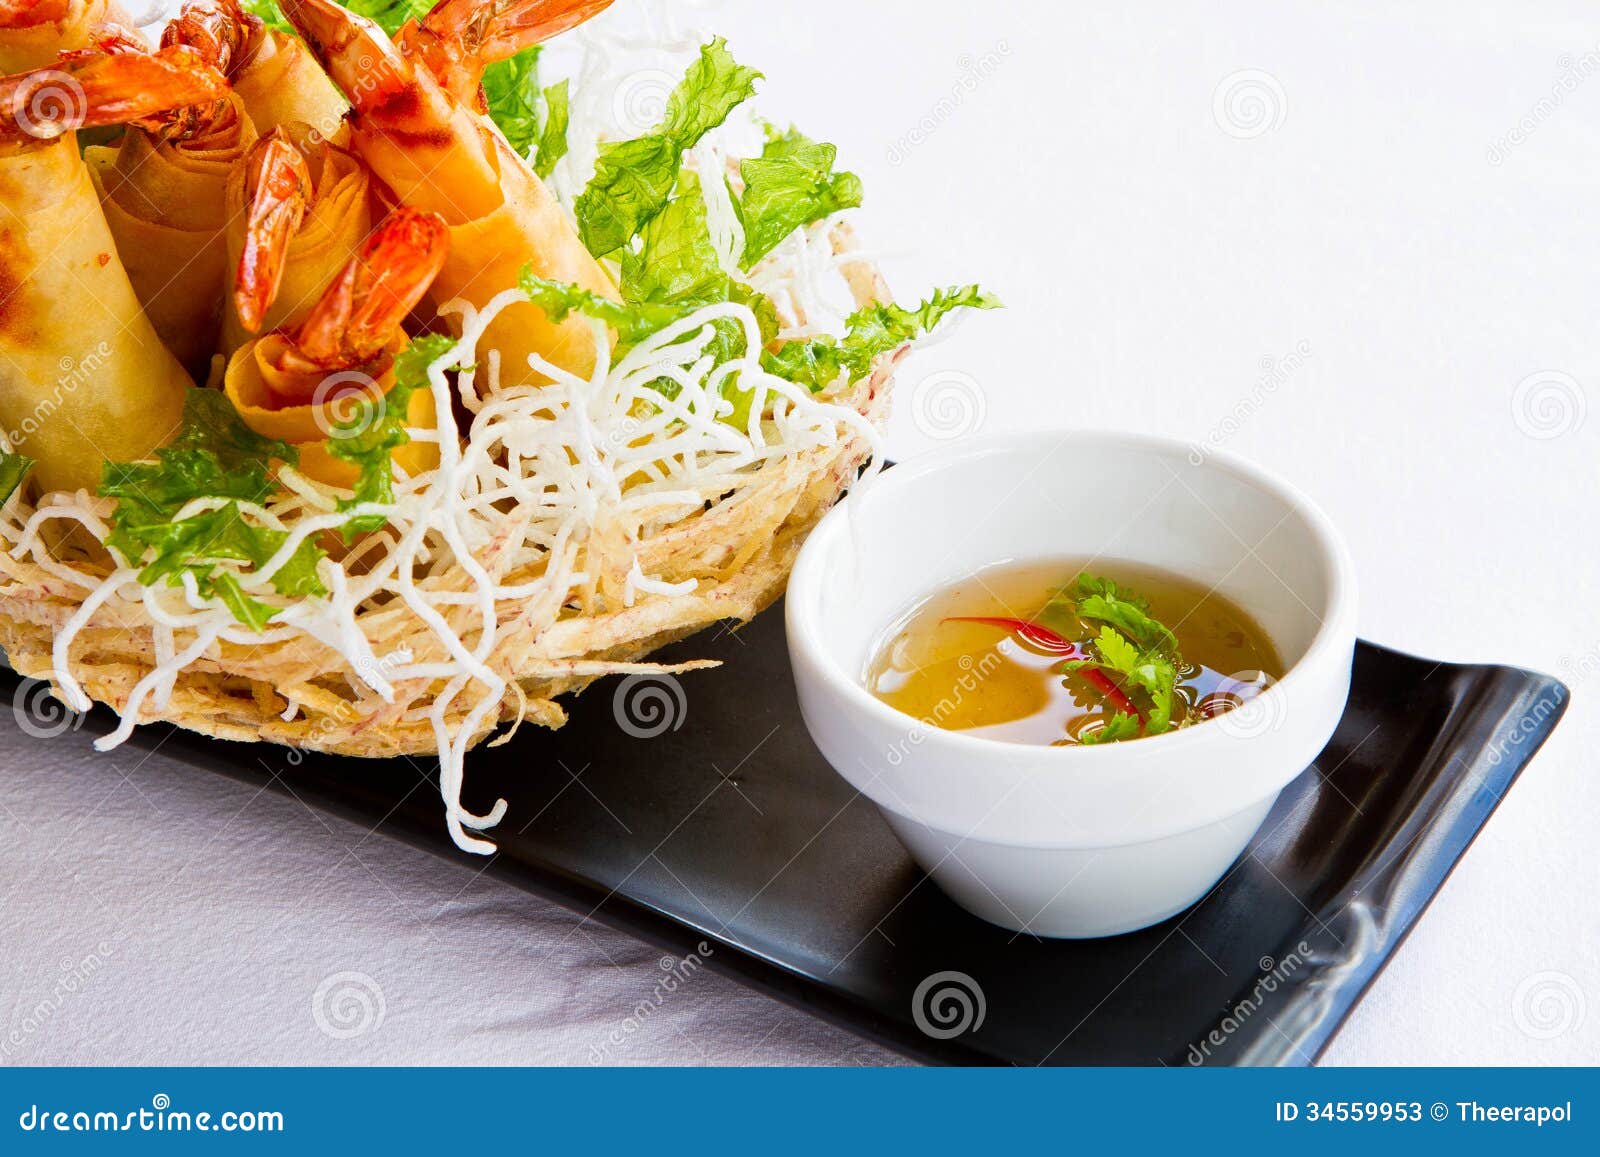 Fried shrimp spring rolls stock image. Image of sauce - 34559953